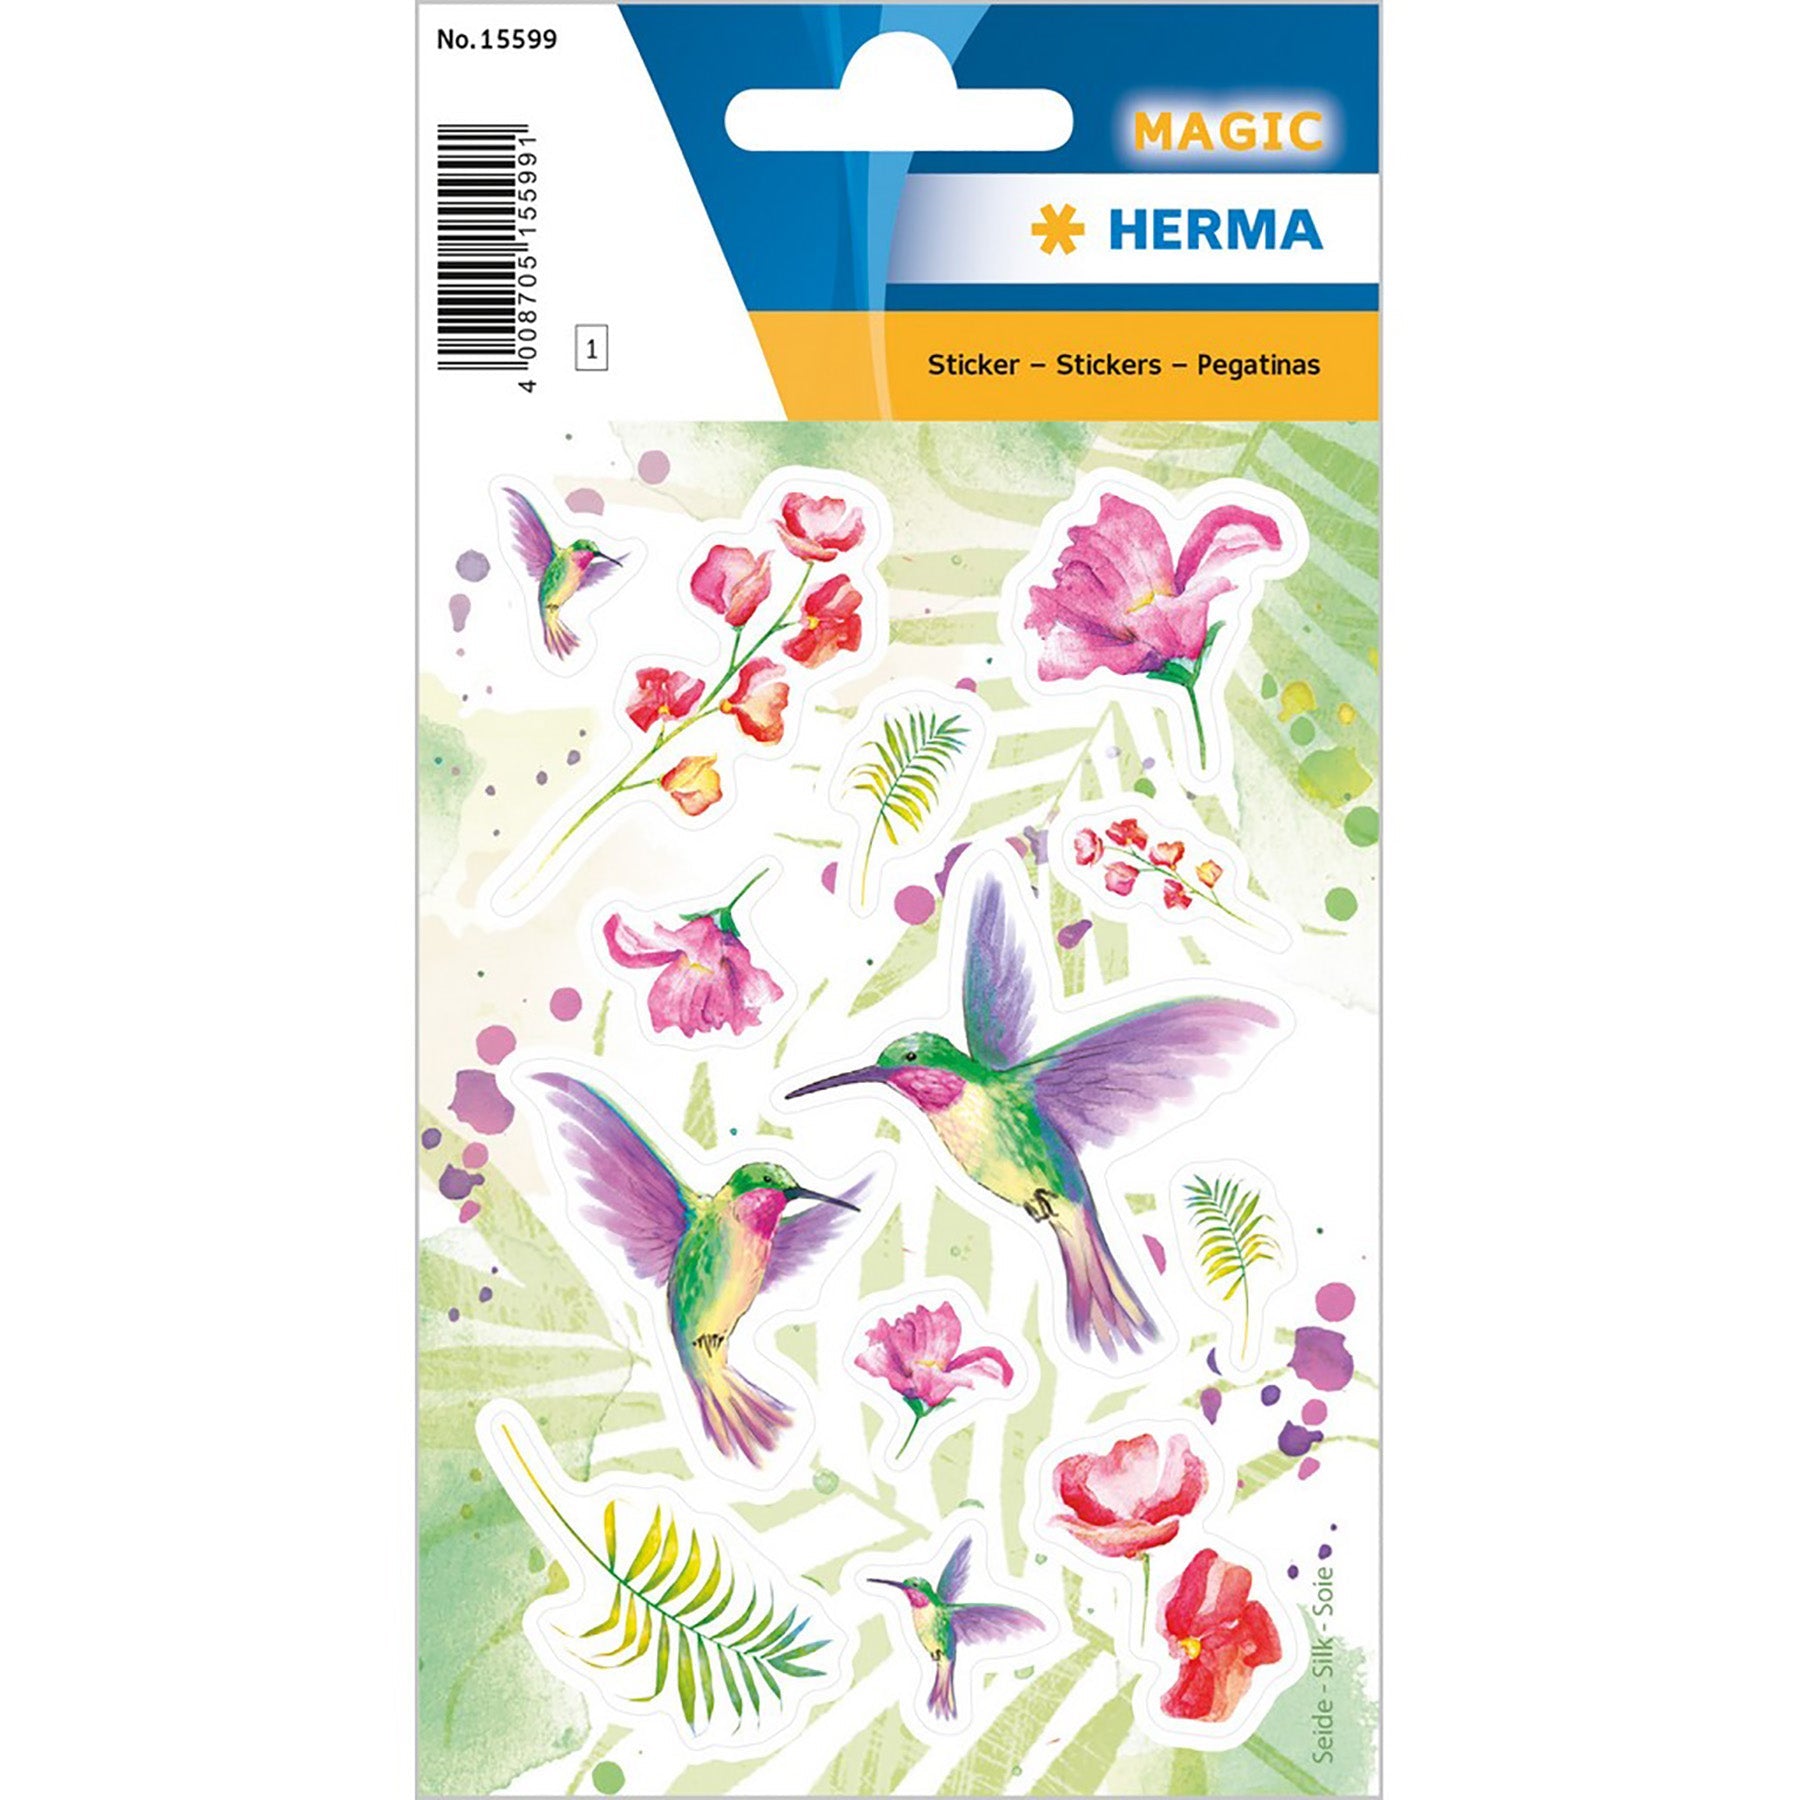 Herma Magic Stickers Tropical Island Silk 4.75x3.1in Sheet